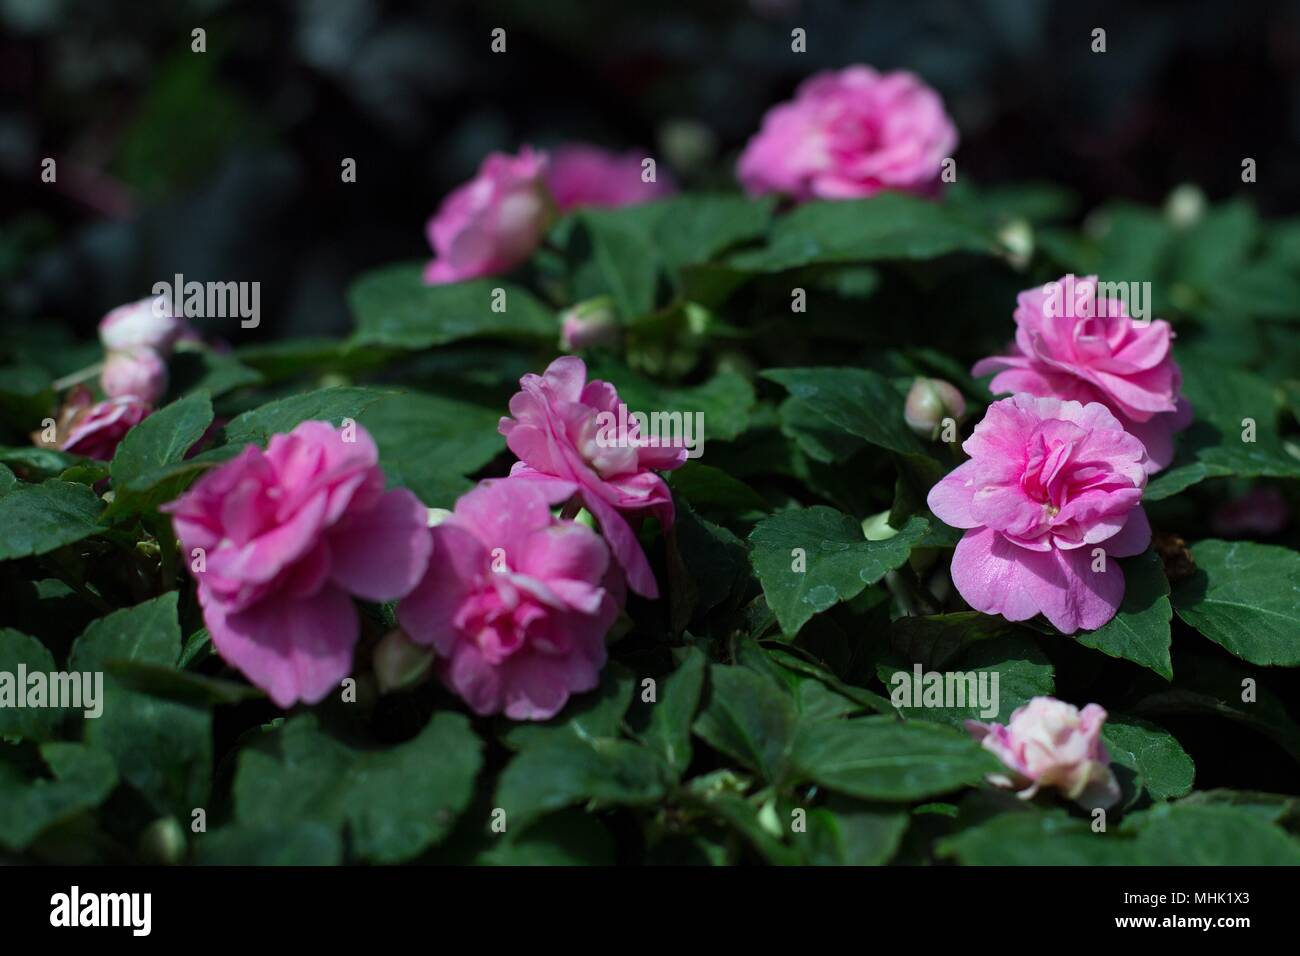 Impatiens rosa fiori. Foto Stock